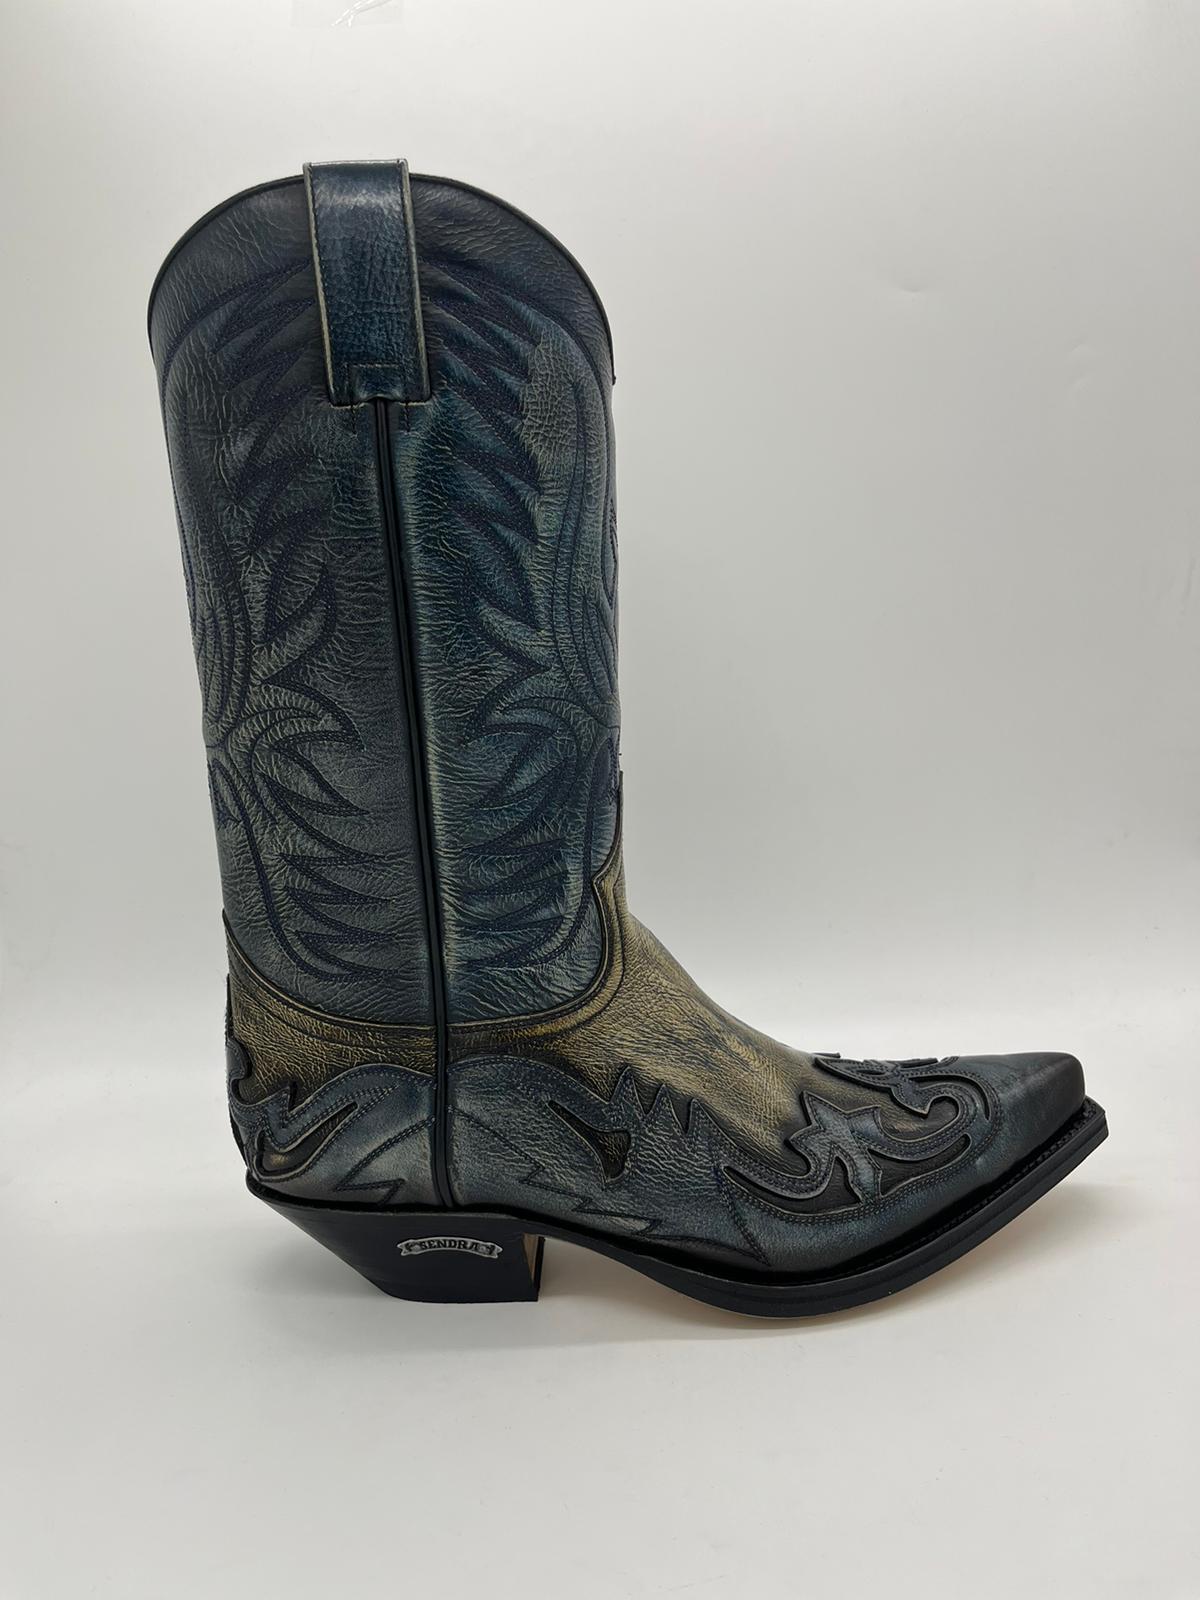 Sendra Boots Western Cowboy Boots Biker Boots 3241 Denver Azul Dirty Hueso